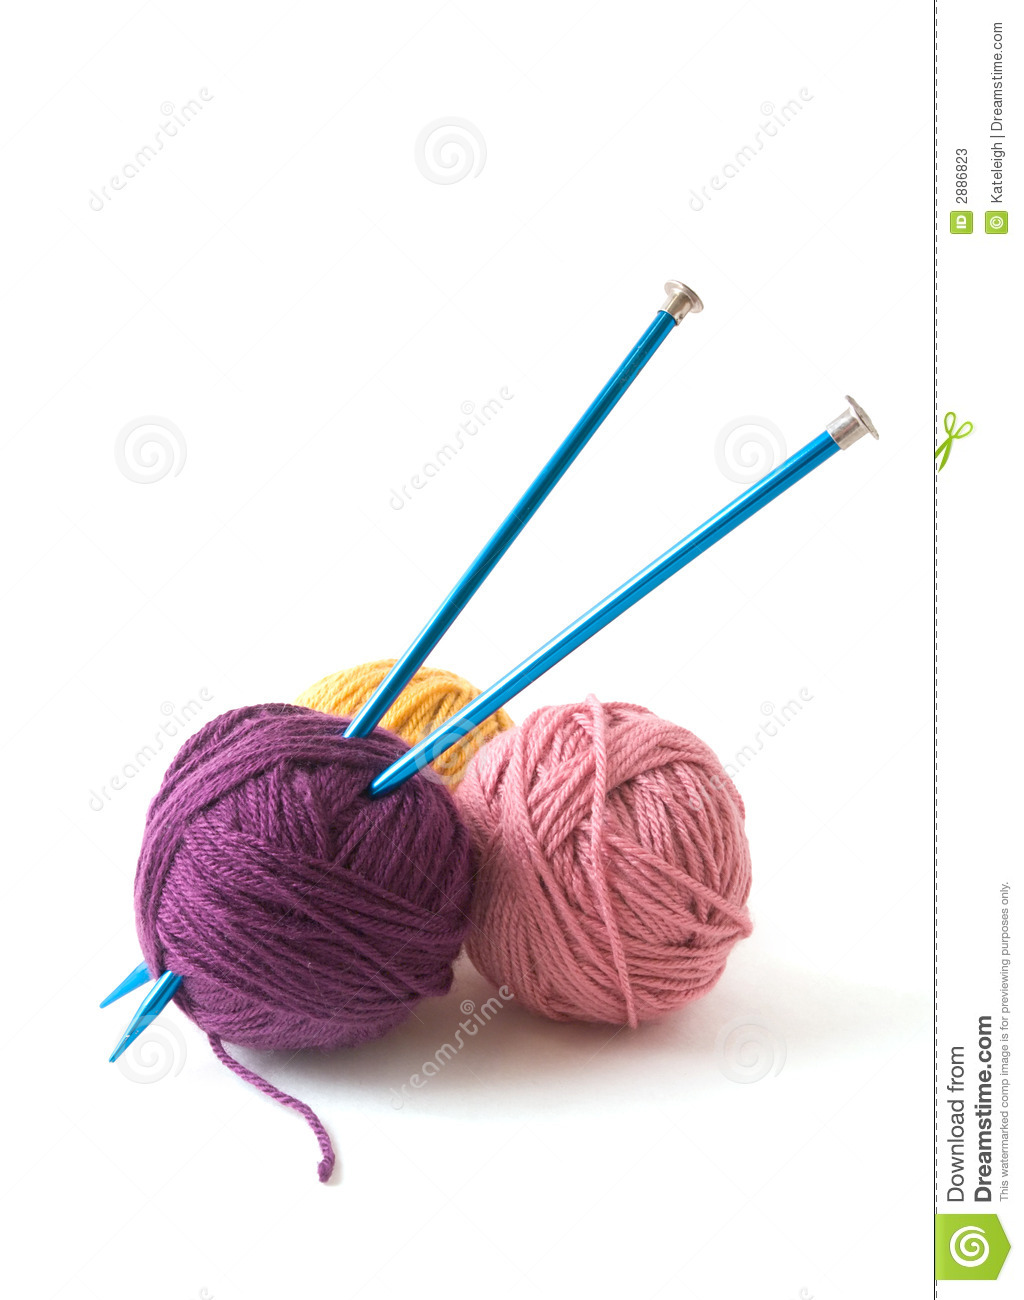 More Similar Stock Images Of   Knitting Needles And Yarn